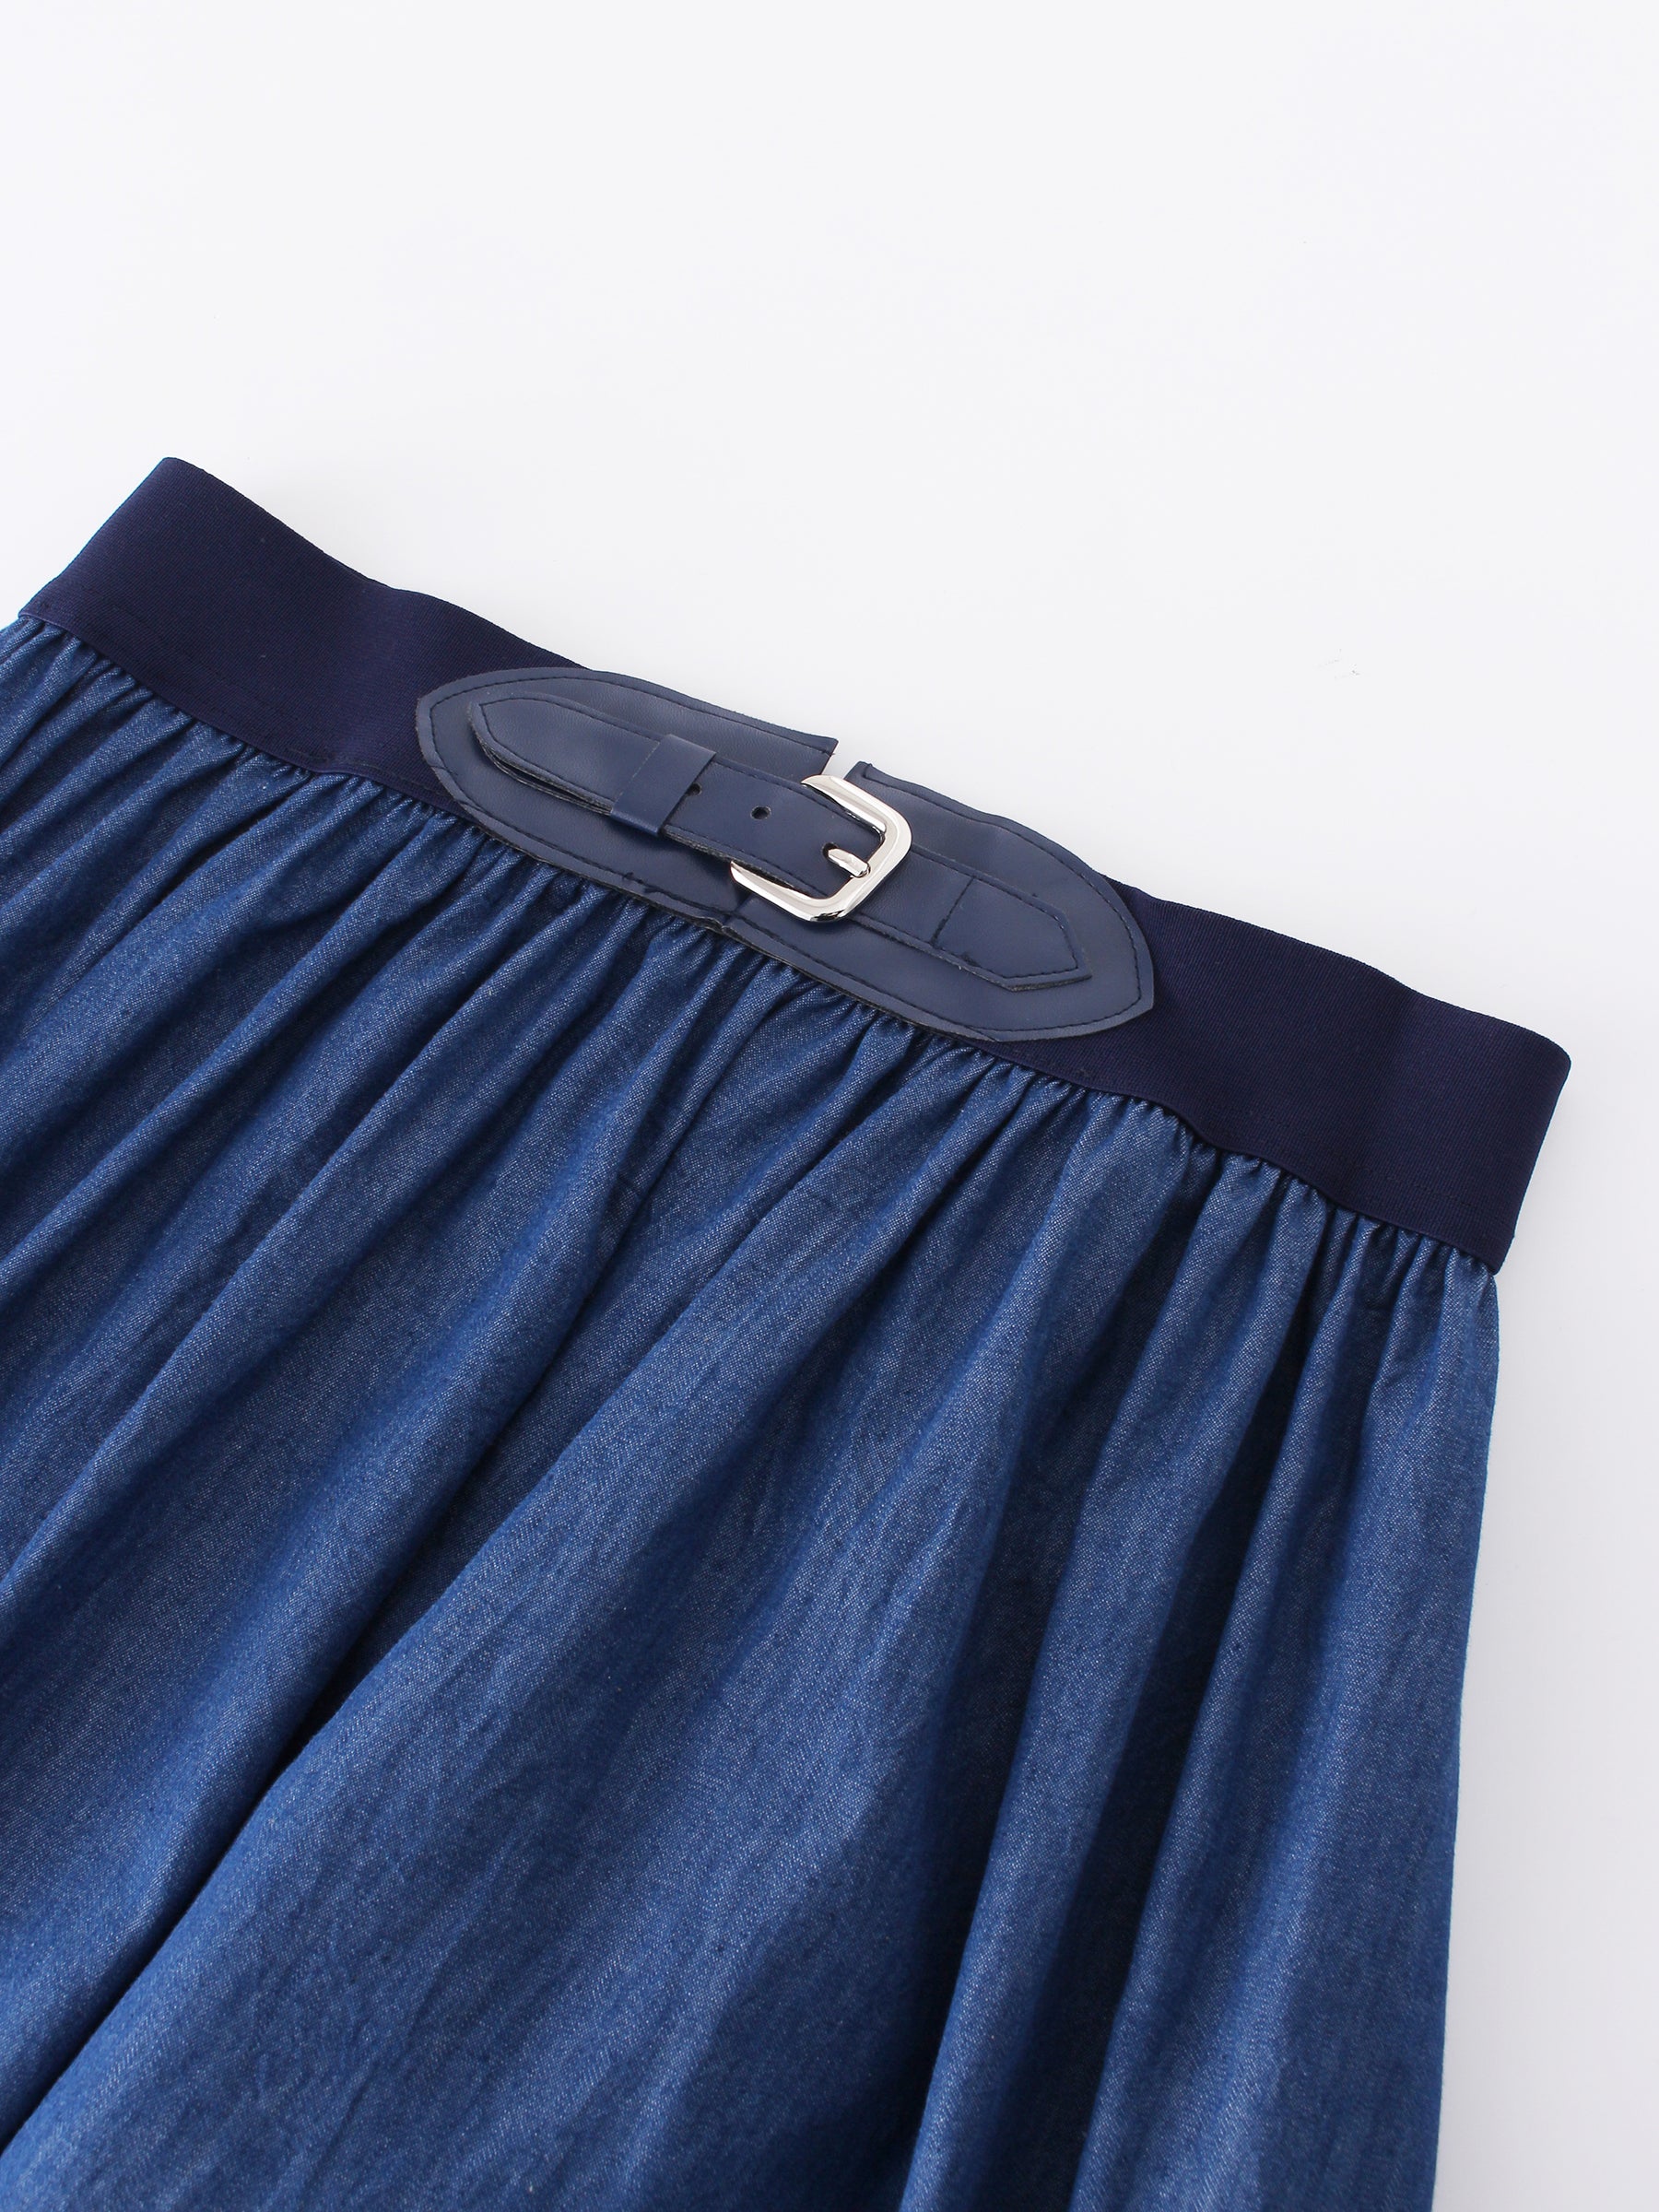 Leather Buckle Denim Skirt- Blue